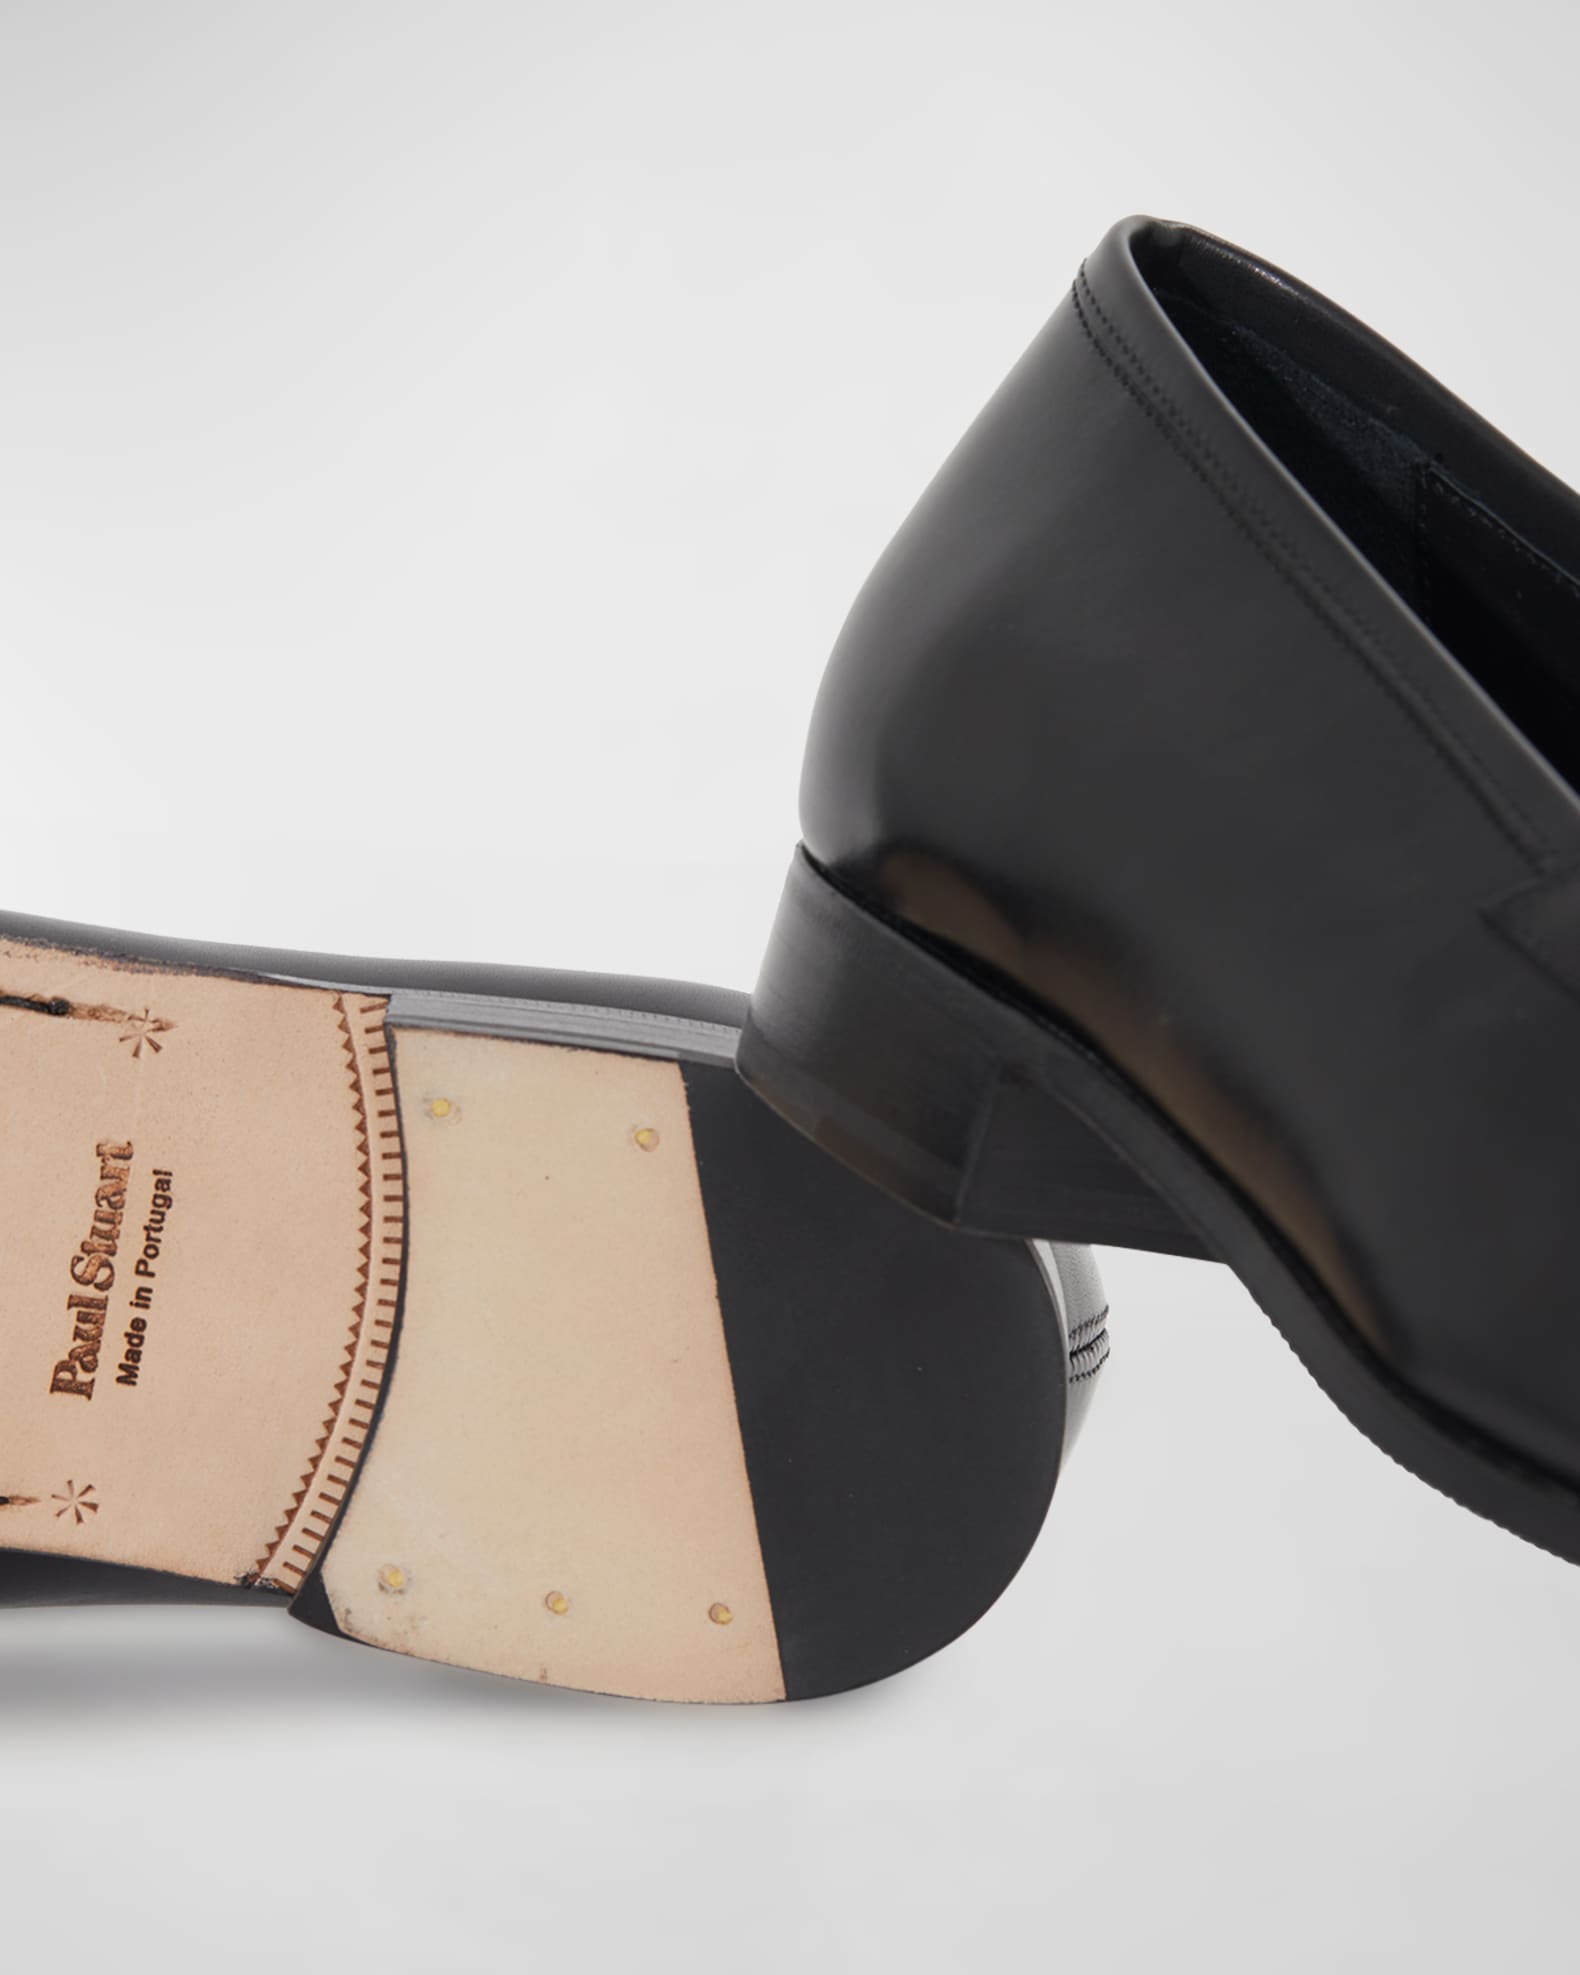 Paul Stuart Men's Ritz Leather Penny Loafers | Neiman Marcus